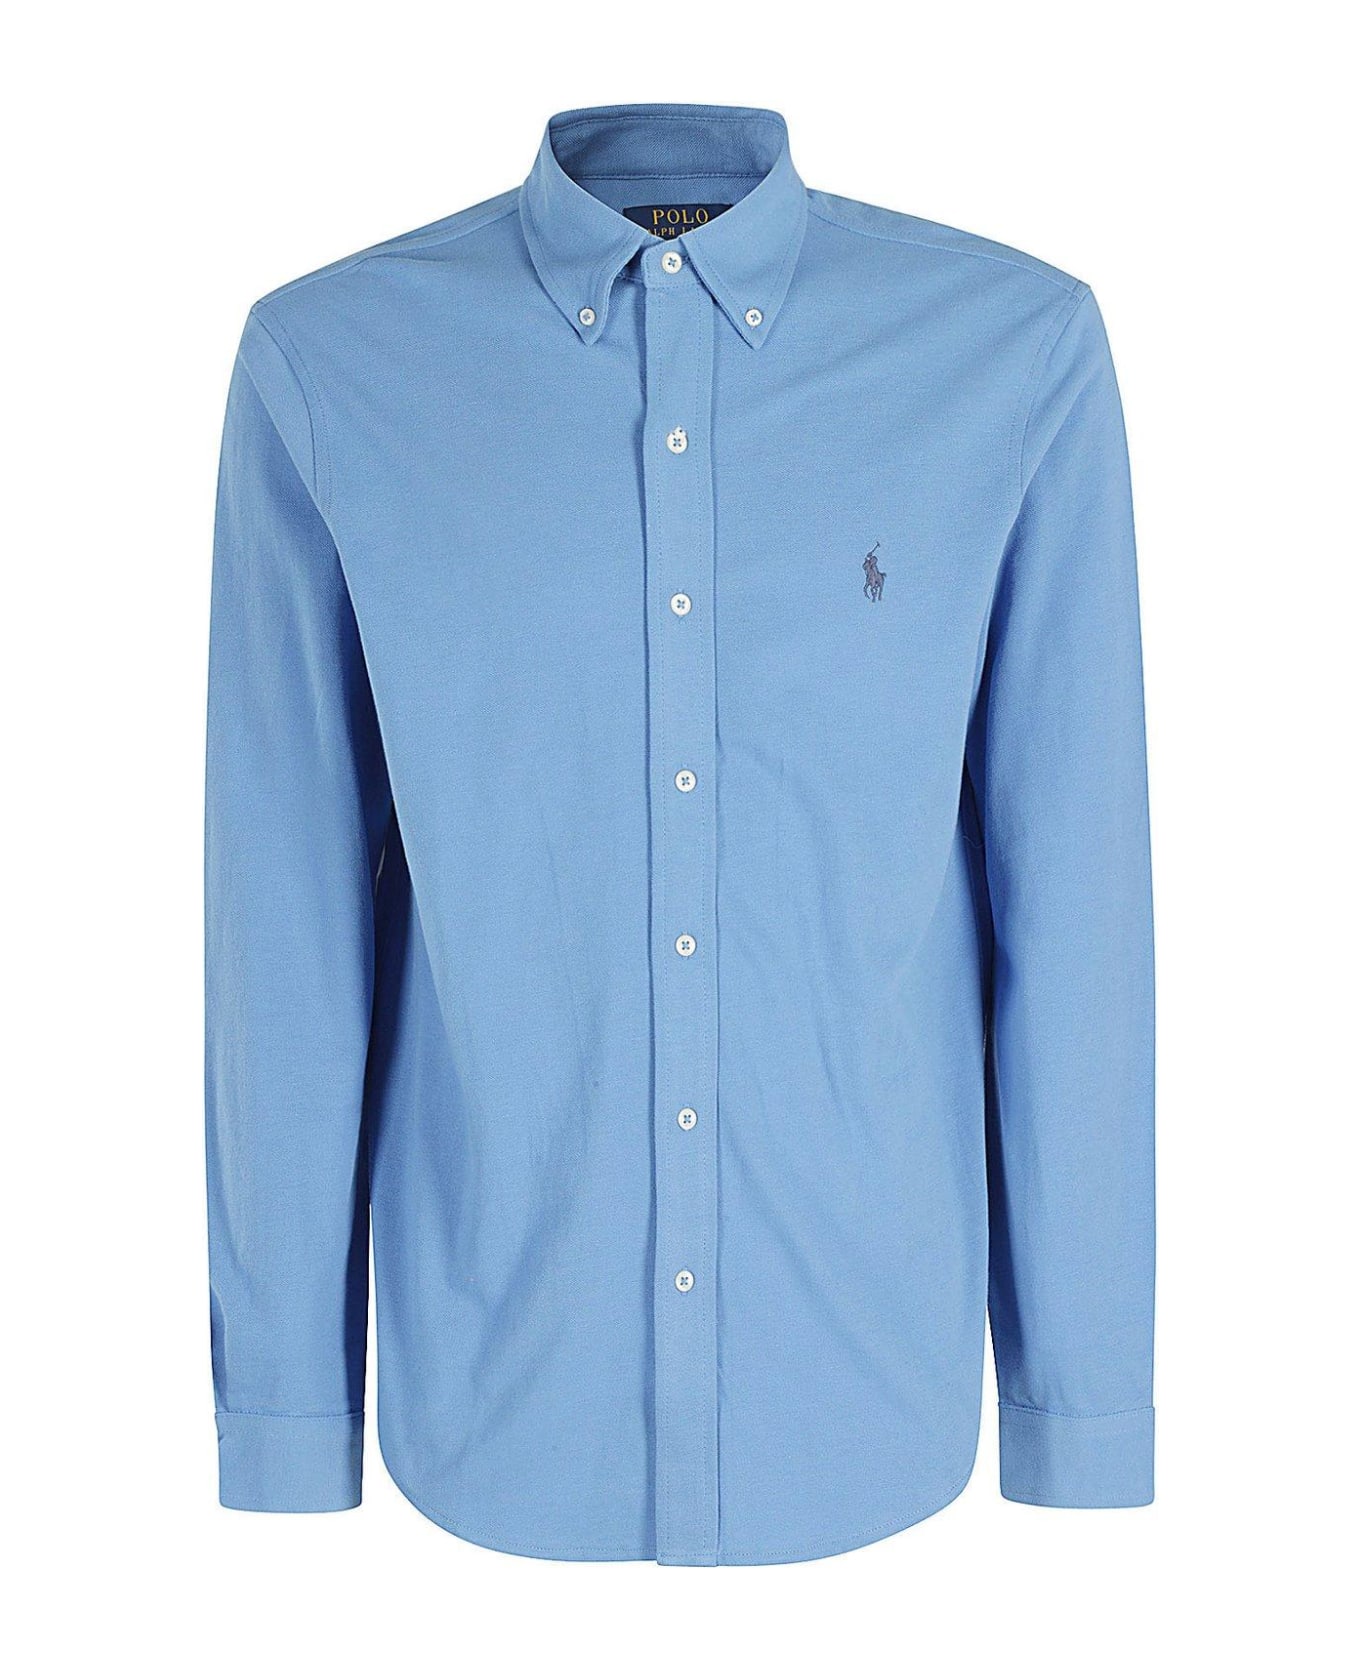 Polo Ralph Lauren Pony Embroidered Buttoned Shirt Polo Ralph Lauren - BLUE シャツ